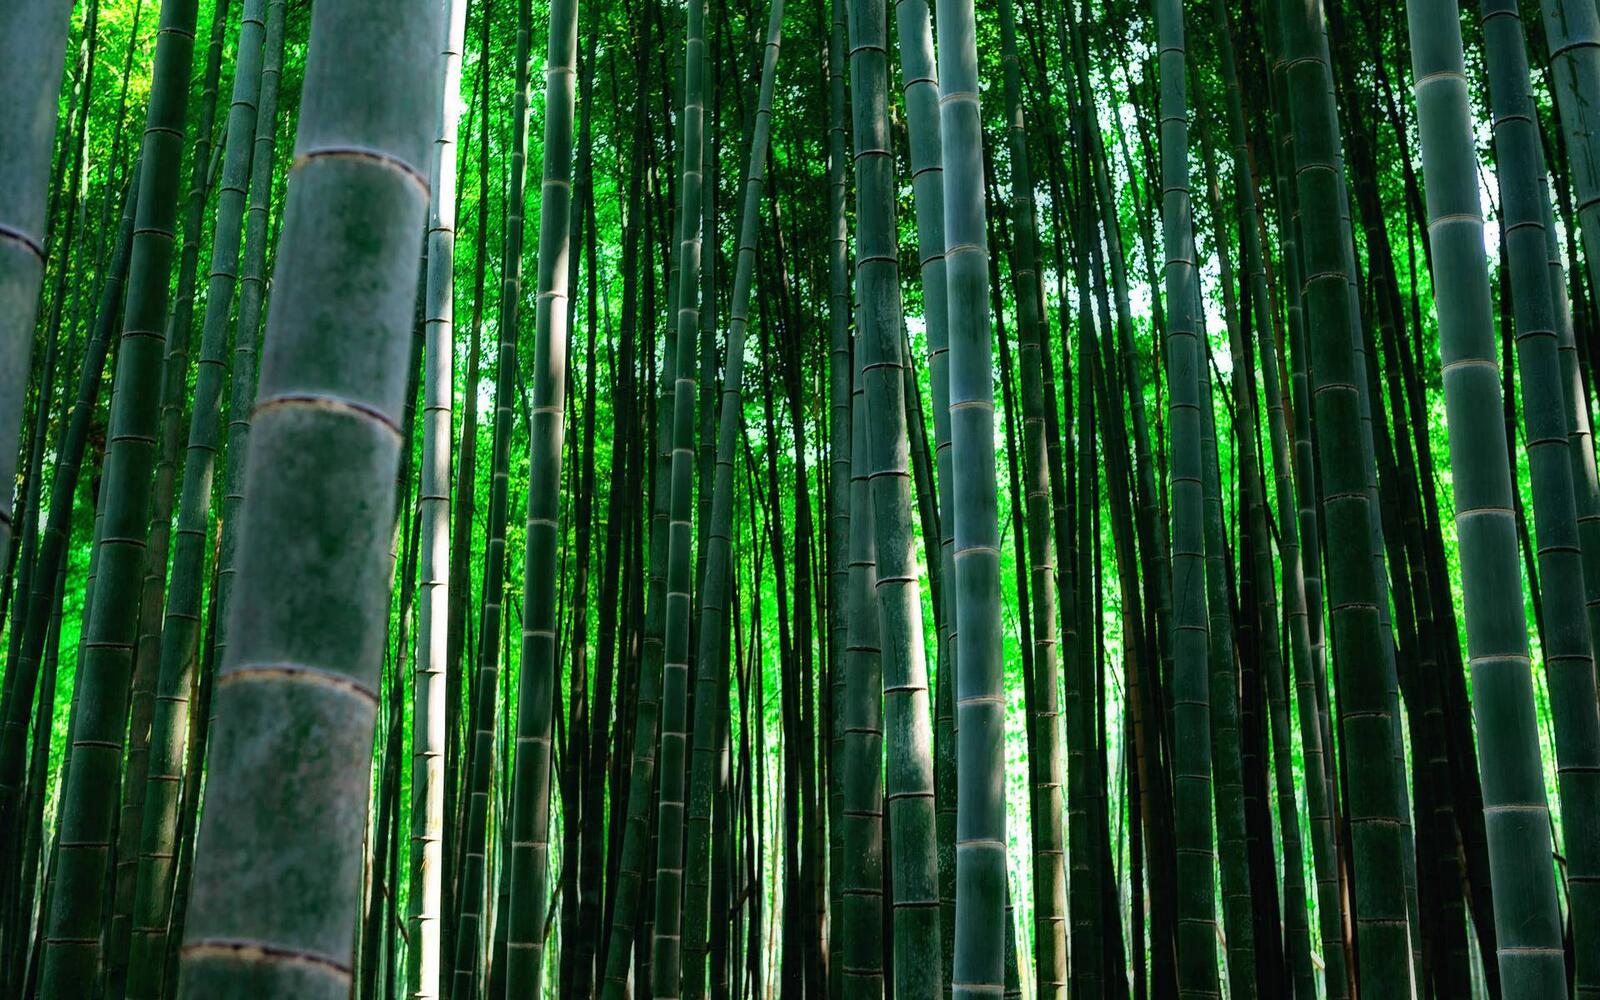 Wallpapers bamboo grove grass stems on the desktop